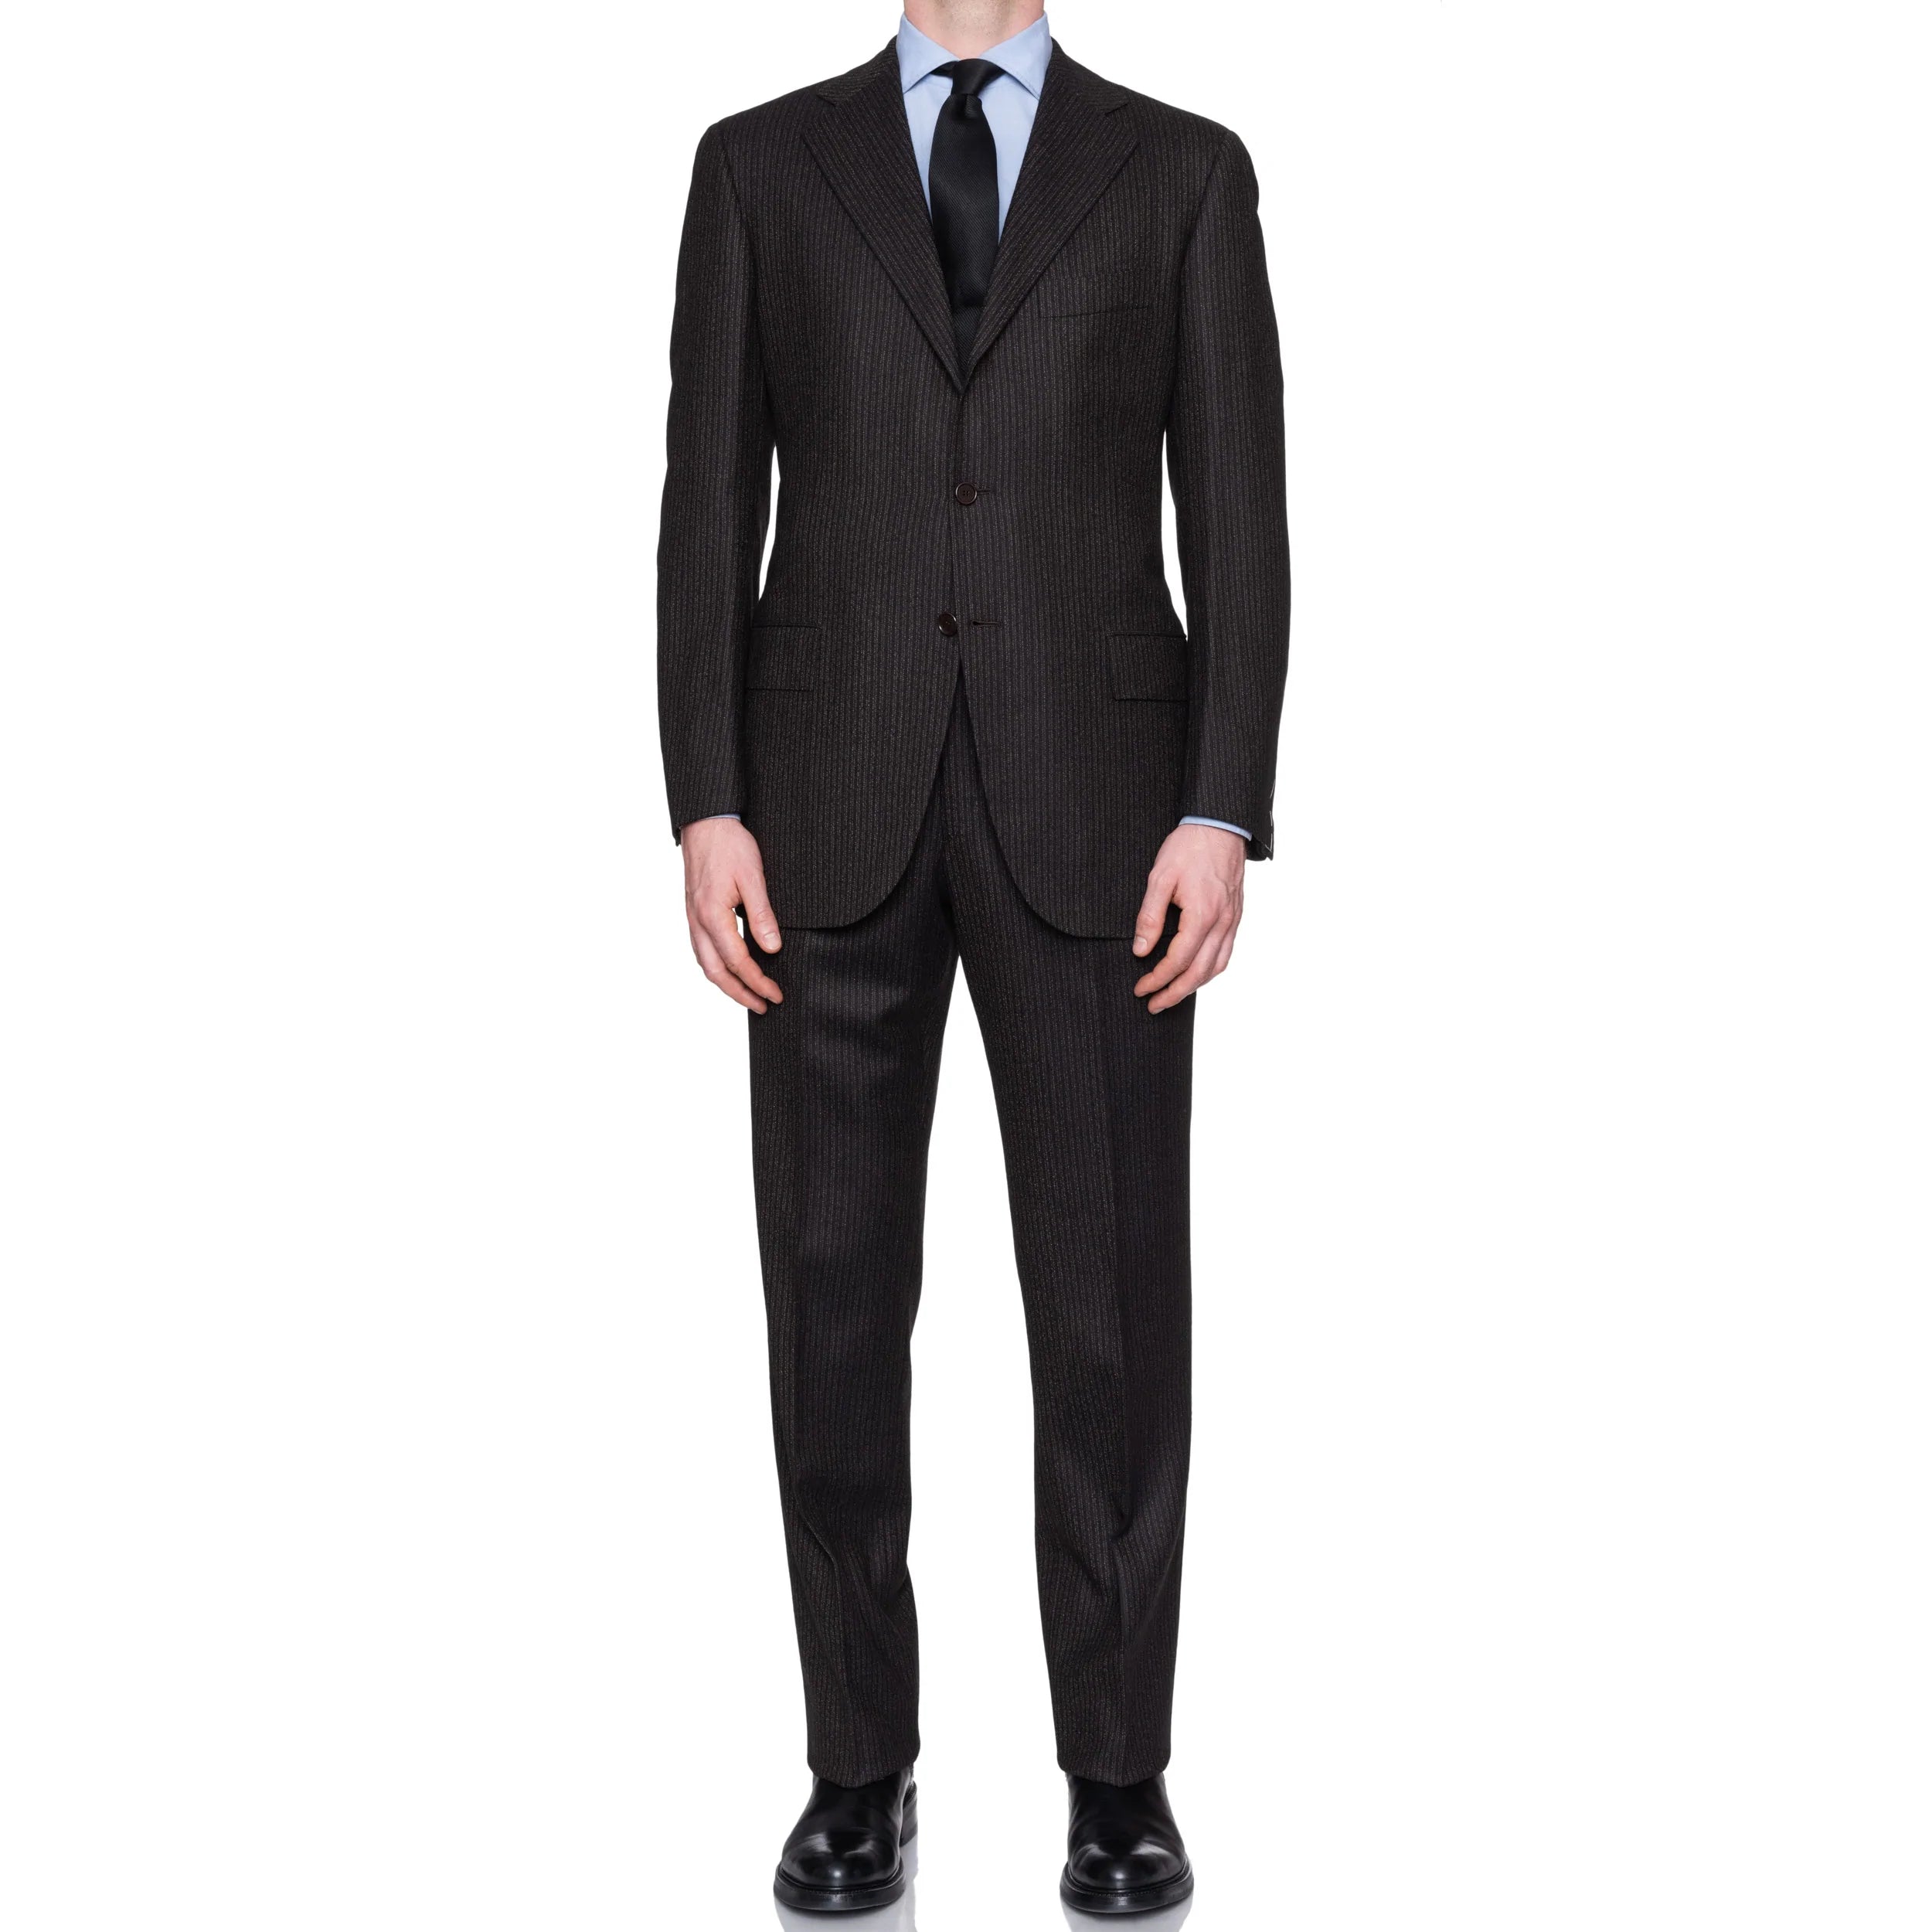 Luxury Men's Suits at Sartoriale – SARTORIALE